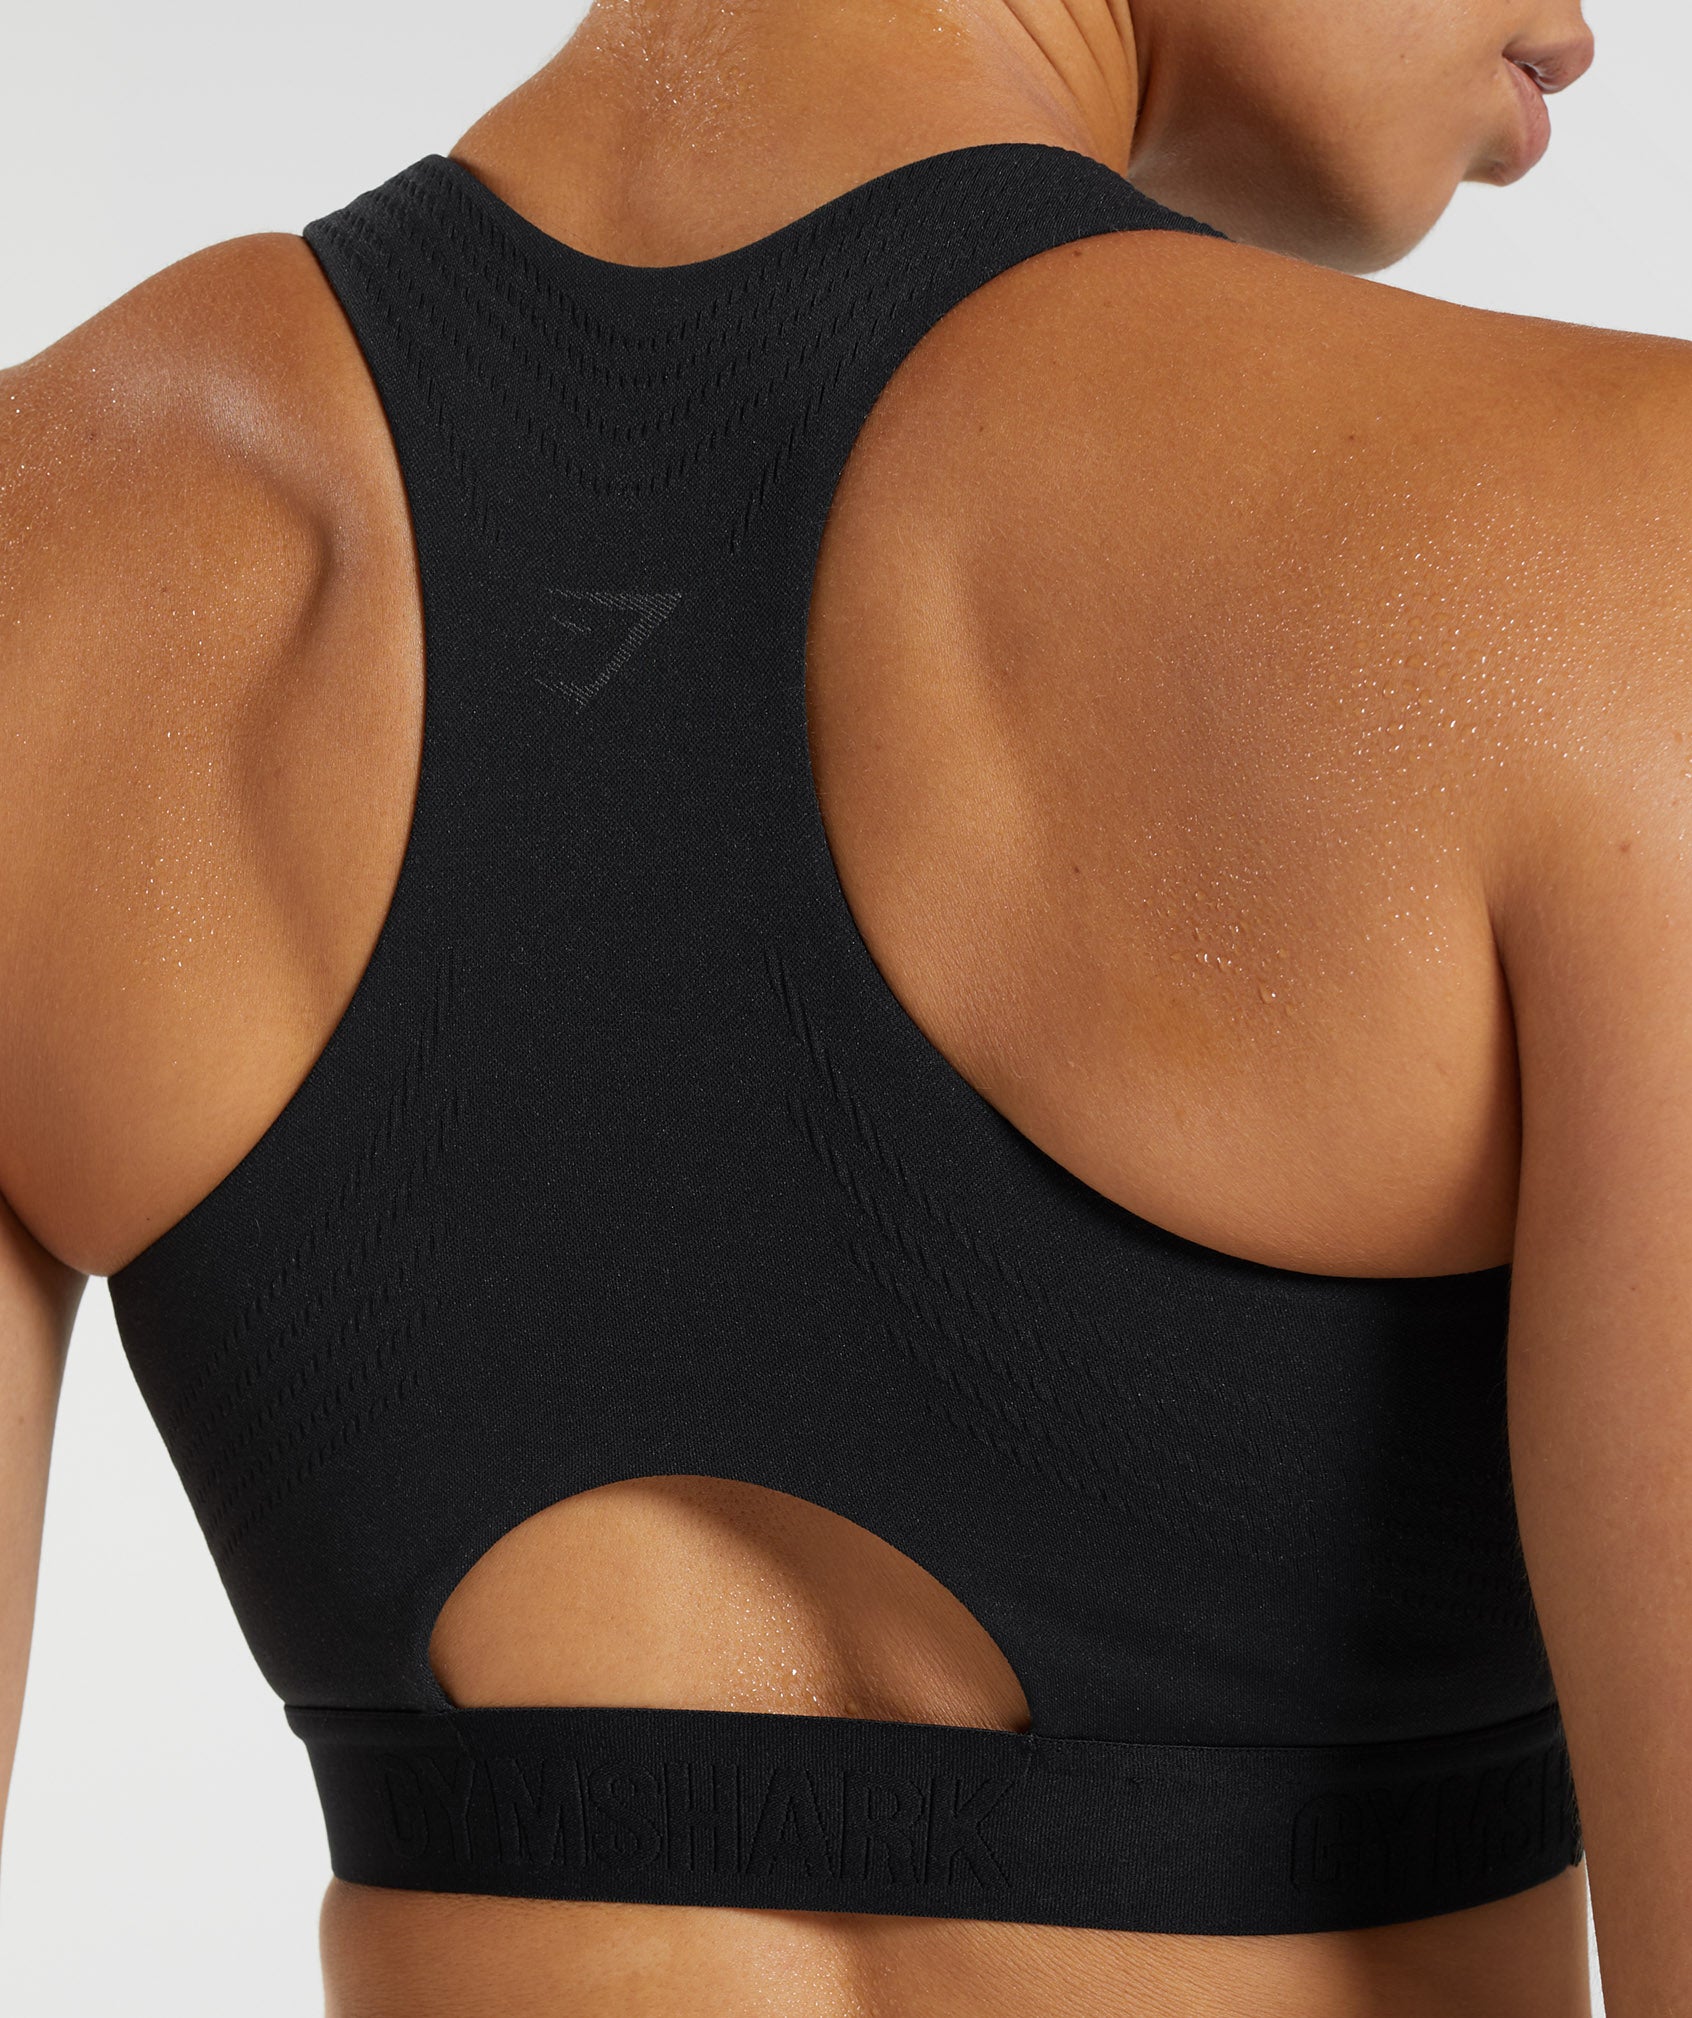 the @gymshark halter neck bra for upper days >>> best way to show